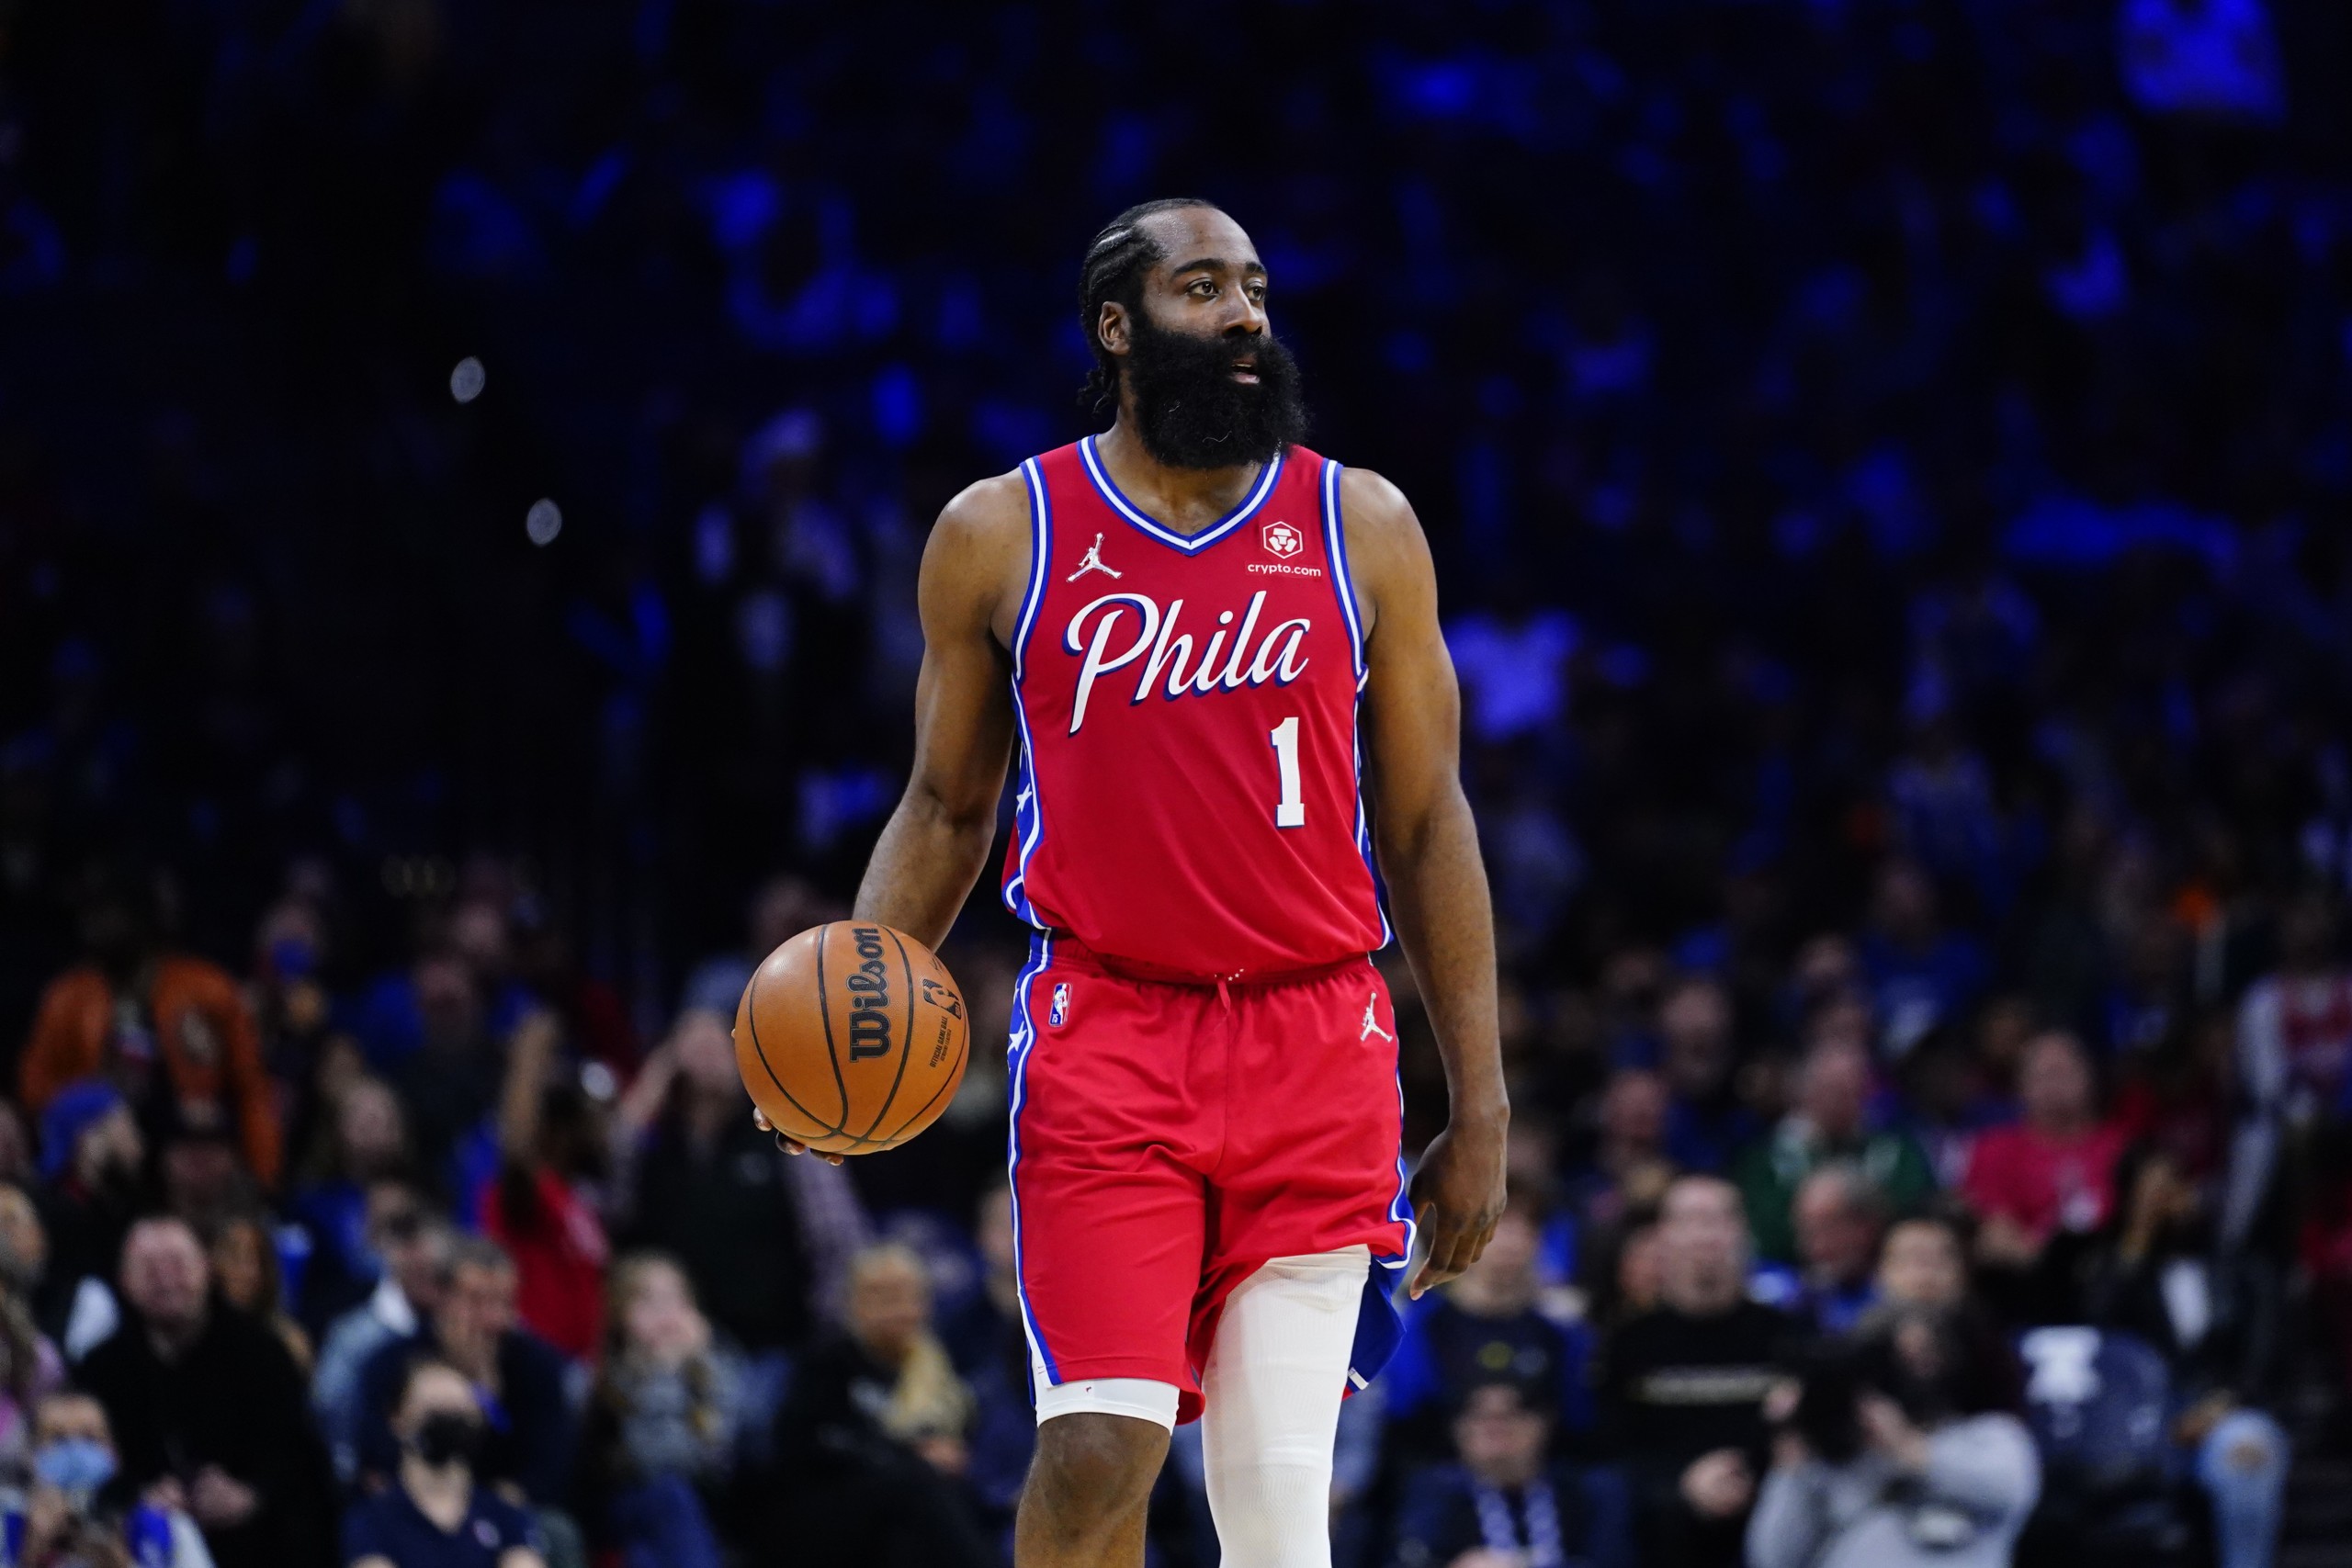 Philadelphia 76ers' James Harden plays during an NBA basketball game, Wednesday, March 2, 2022, in Philadelphia. (AP Photo/Matt Slocum)